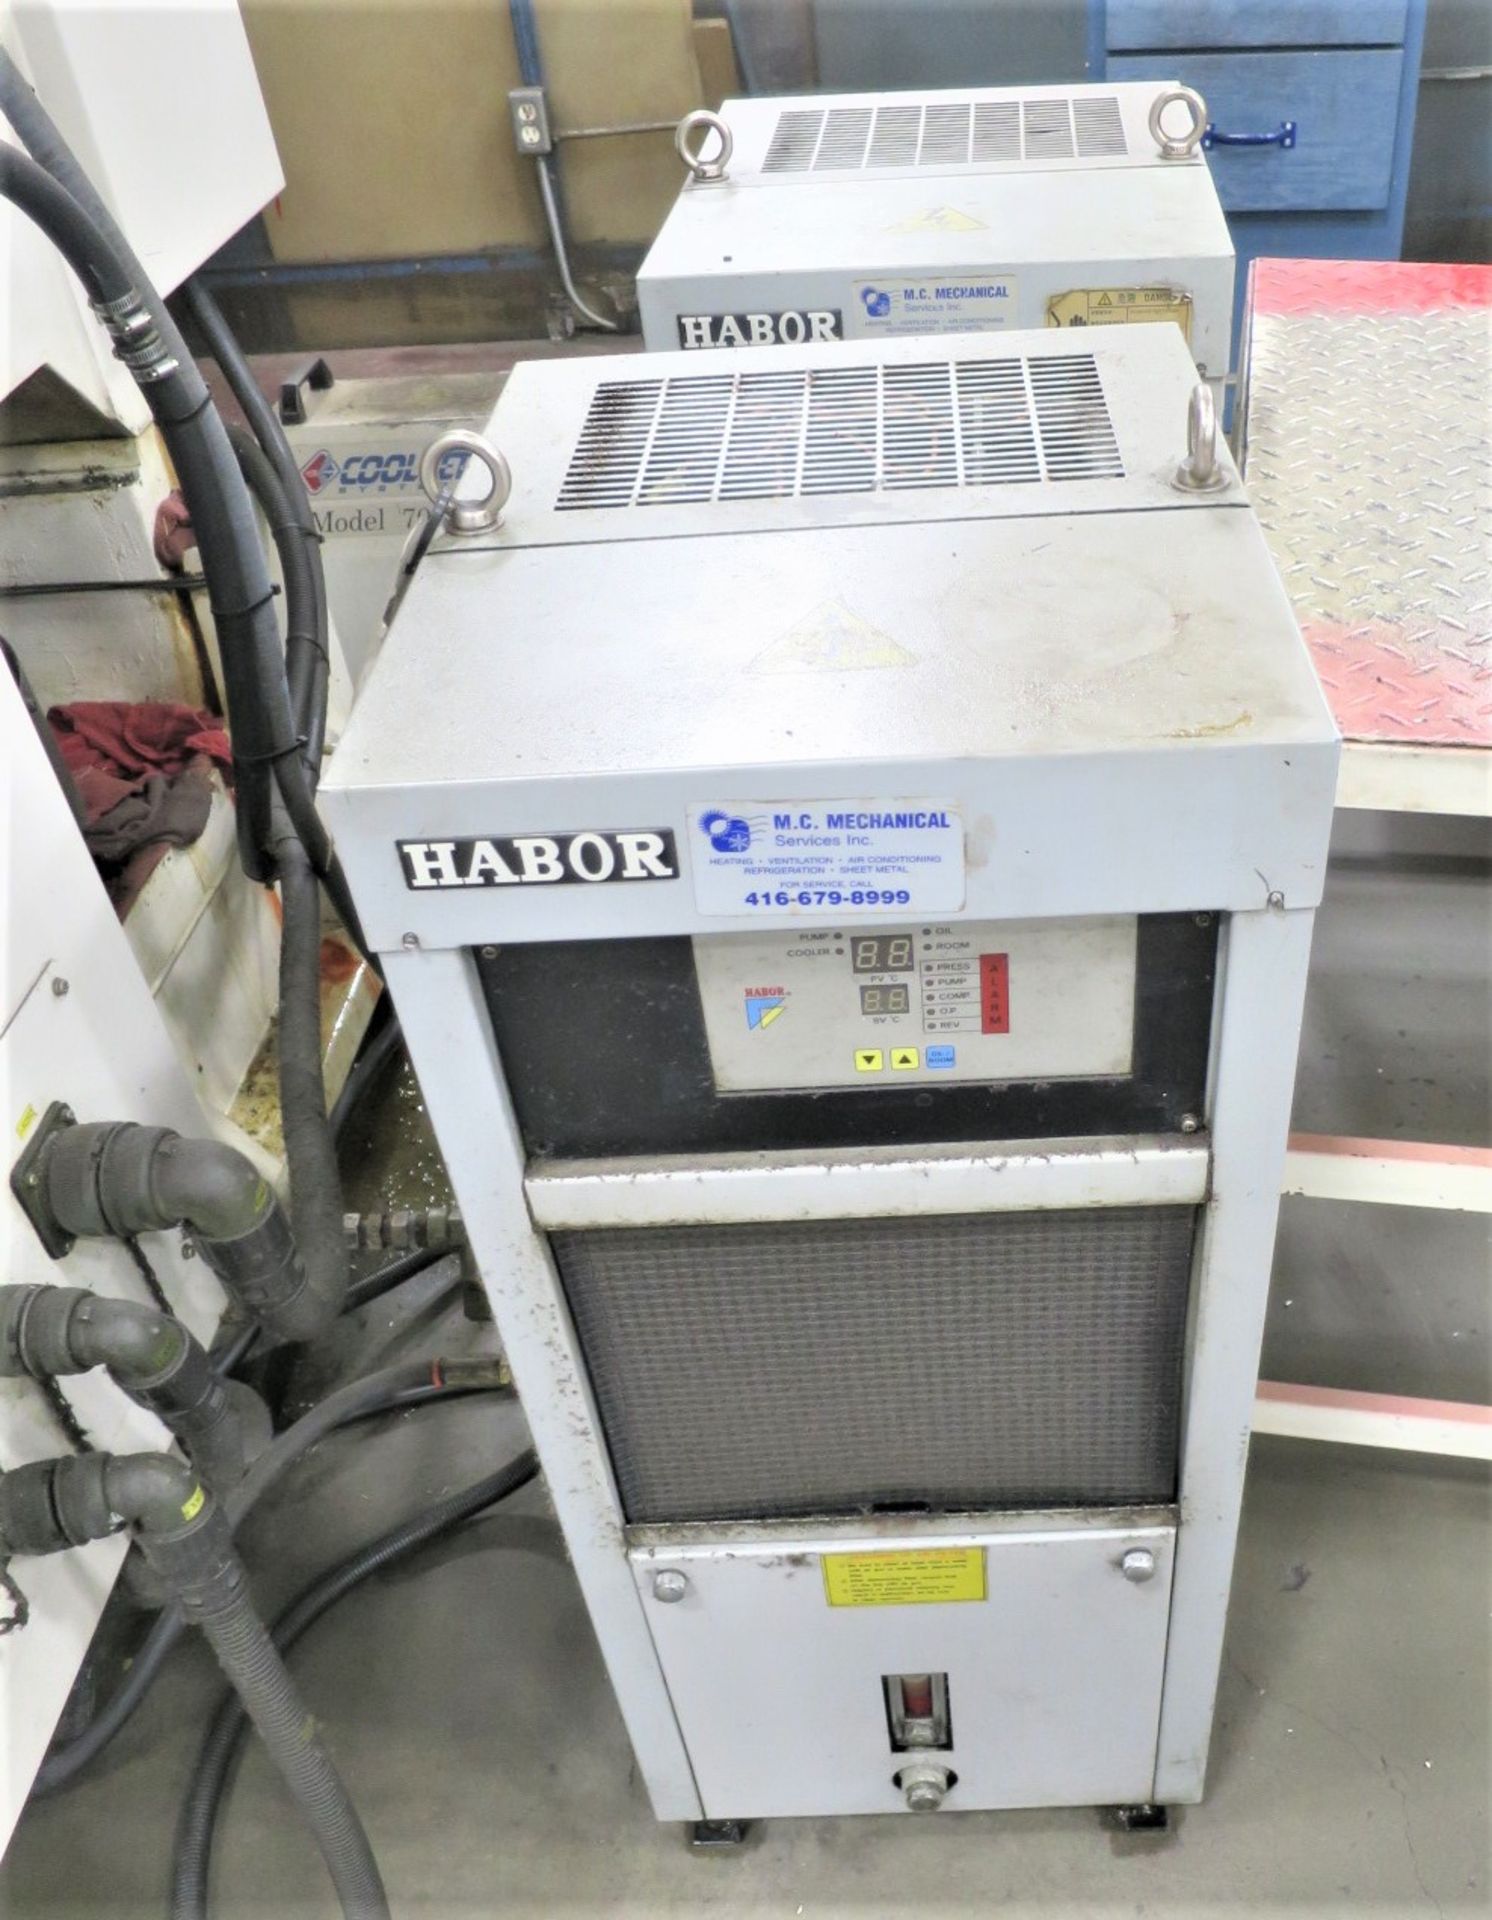 Daewoo DMV-650 3-Axis 50 Taper CNC Vertical Machining Center, S/N AV6S0007, New 1997 - Image 11 of 12